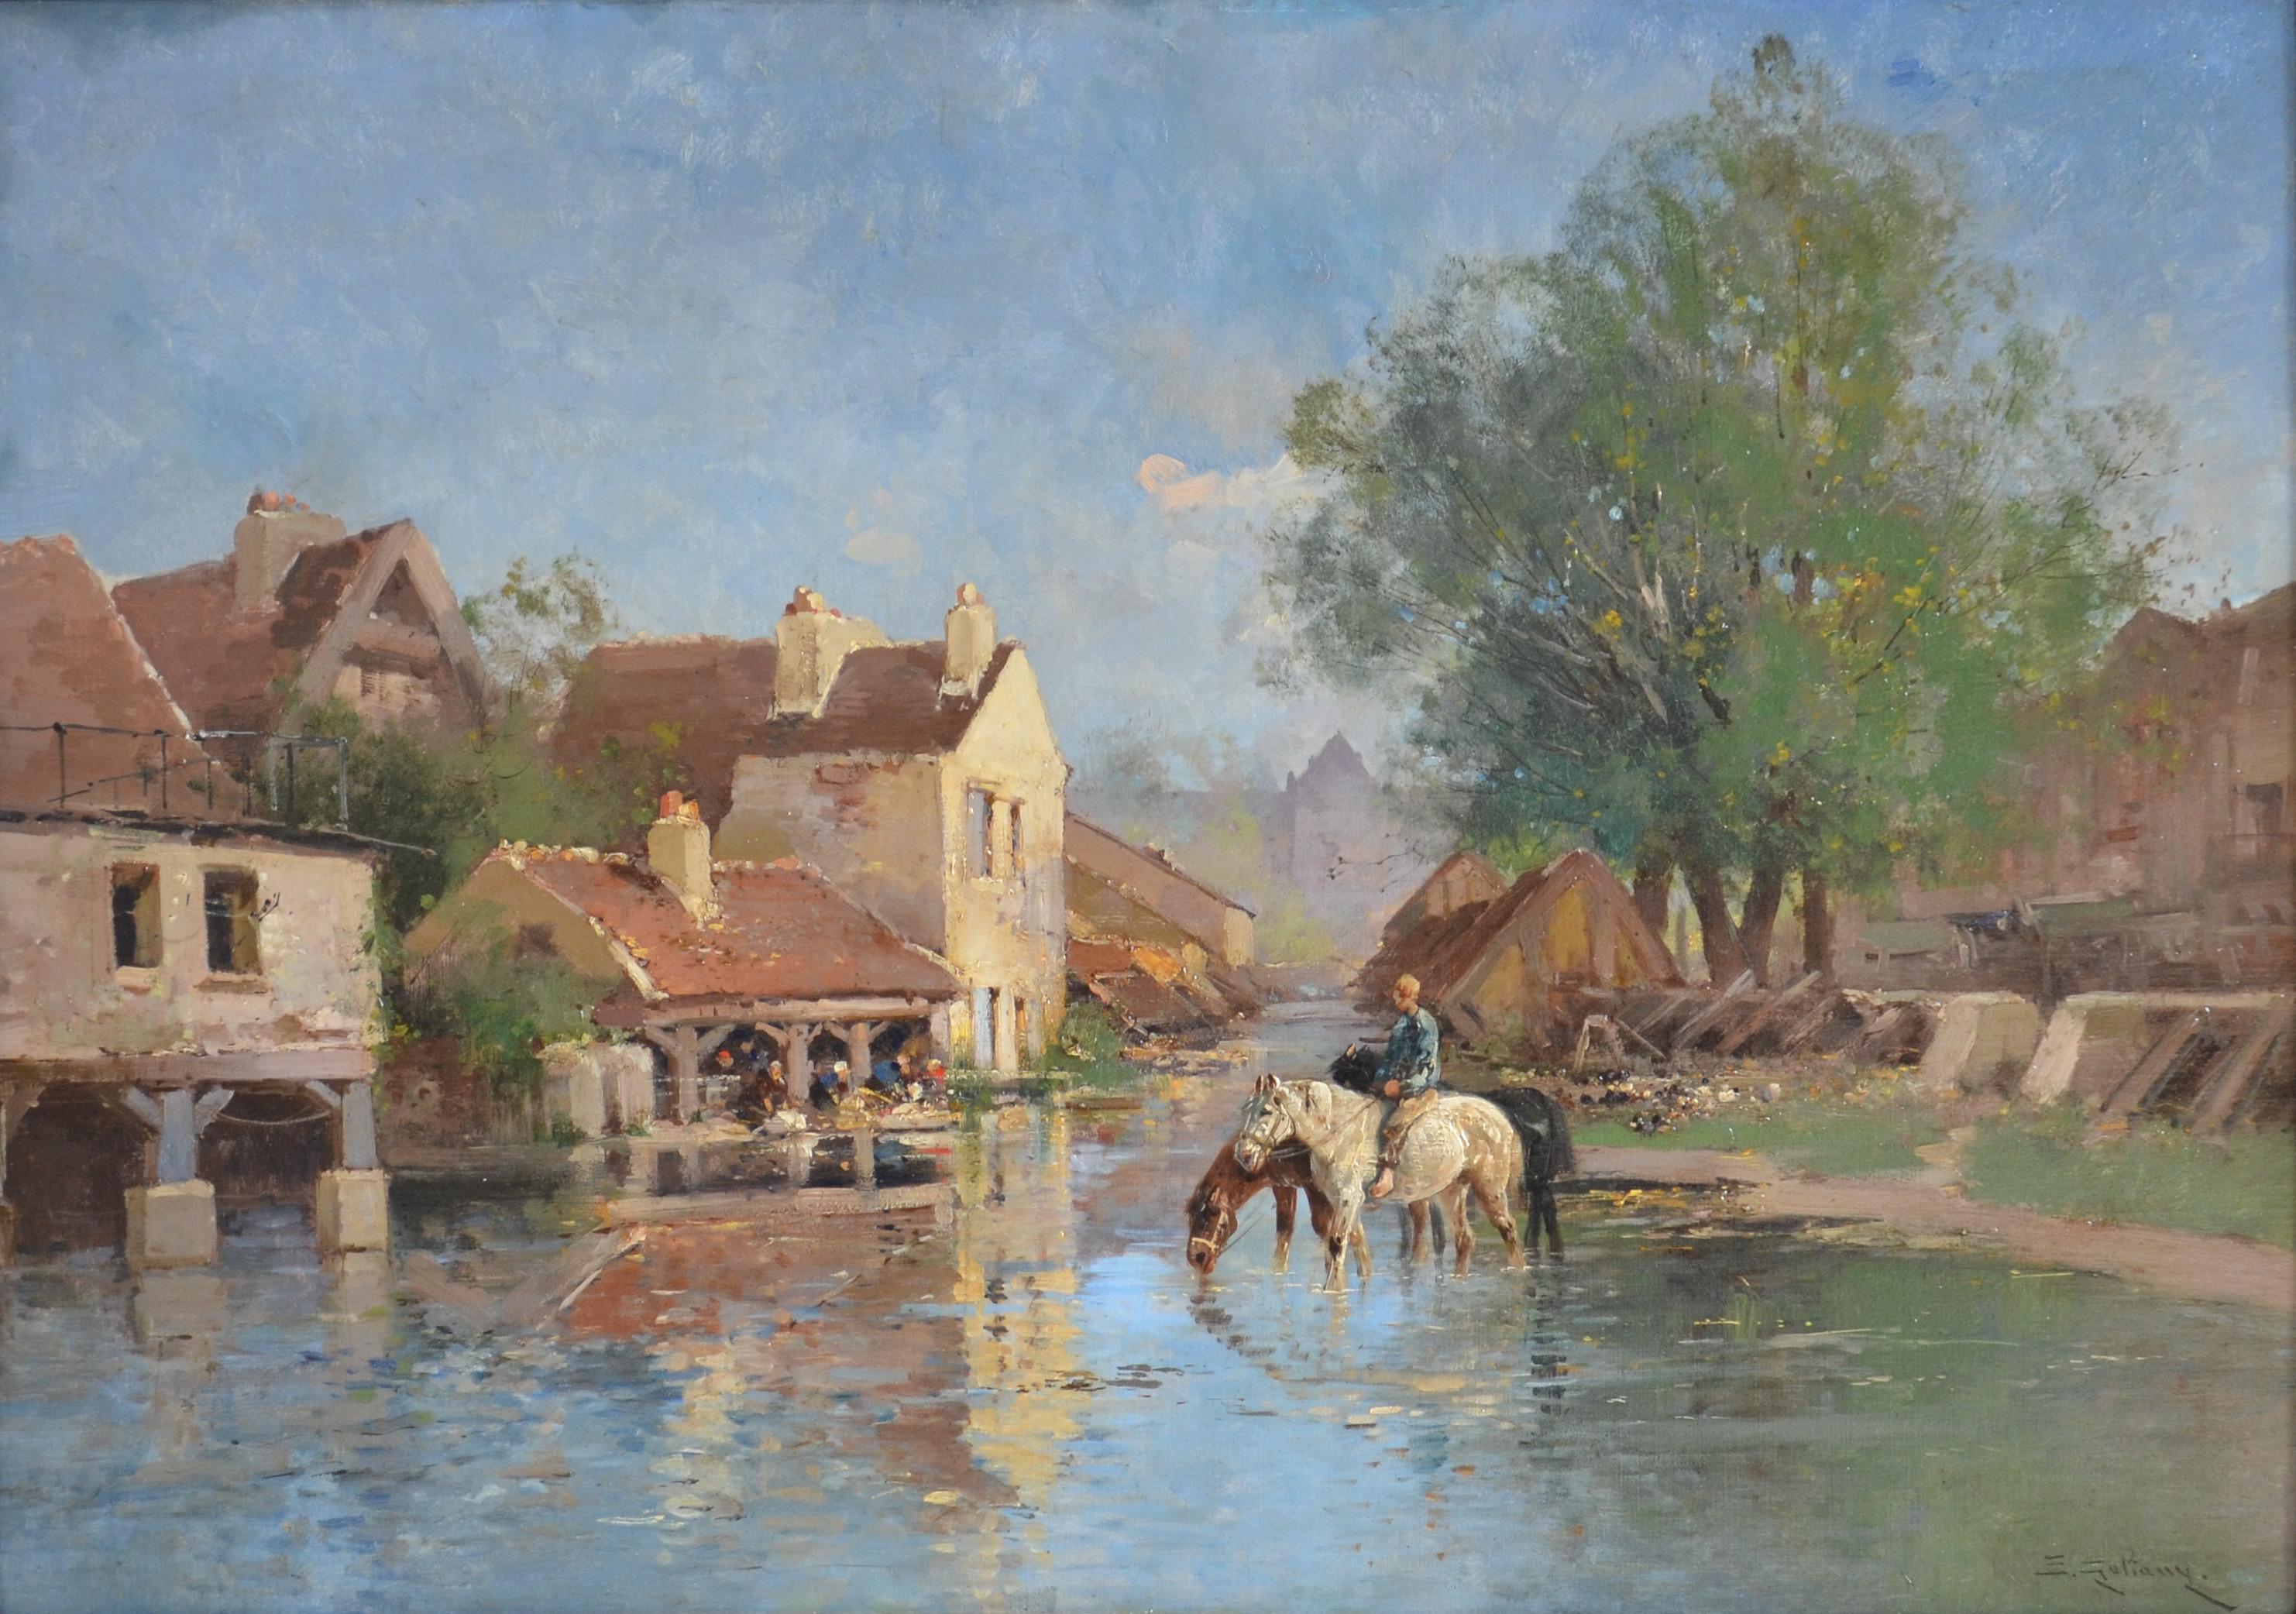 Watering the Horses - Normandie, France - Village - River - Man on Horseback